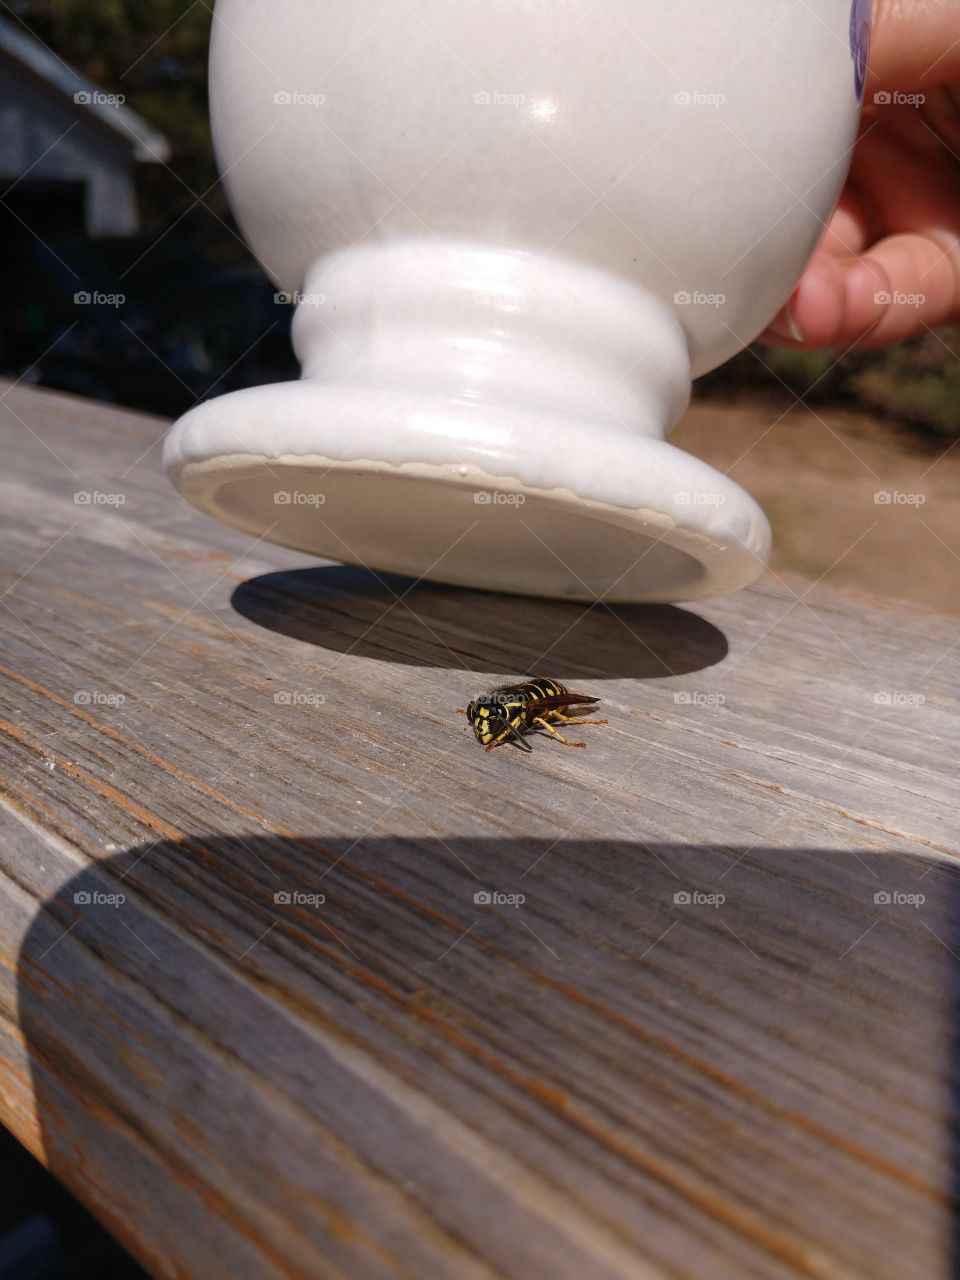 wasp until cup